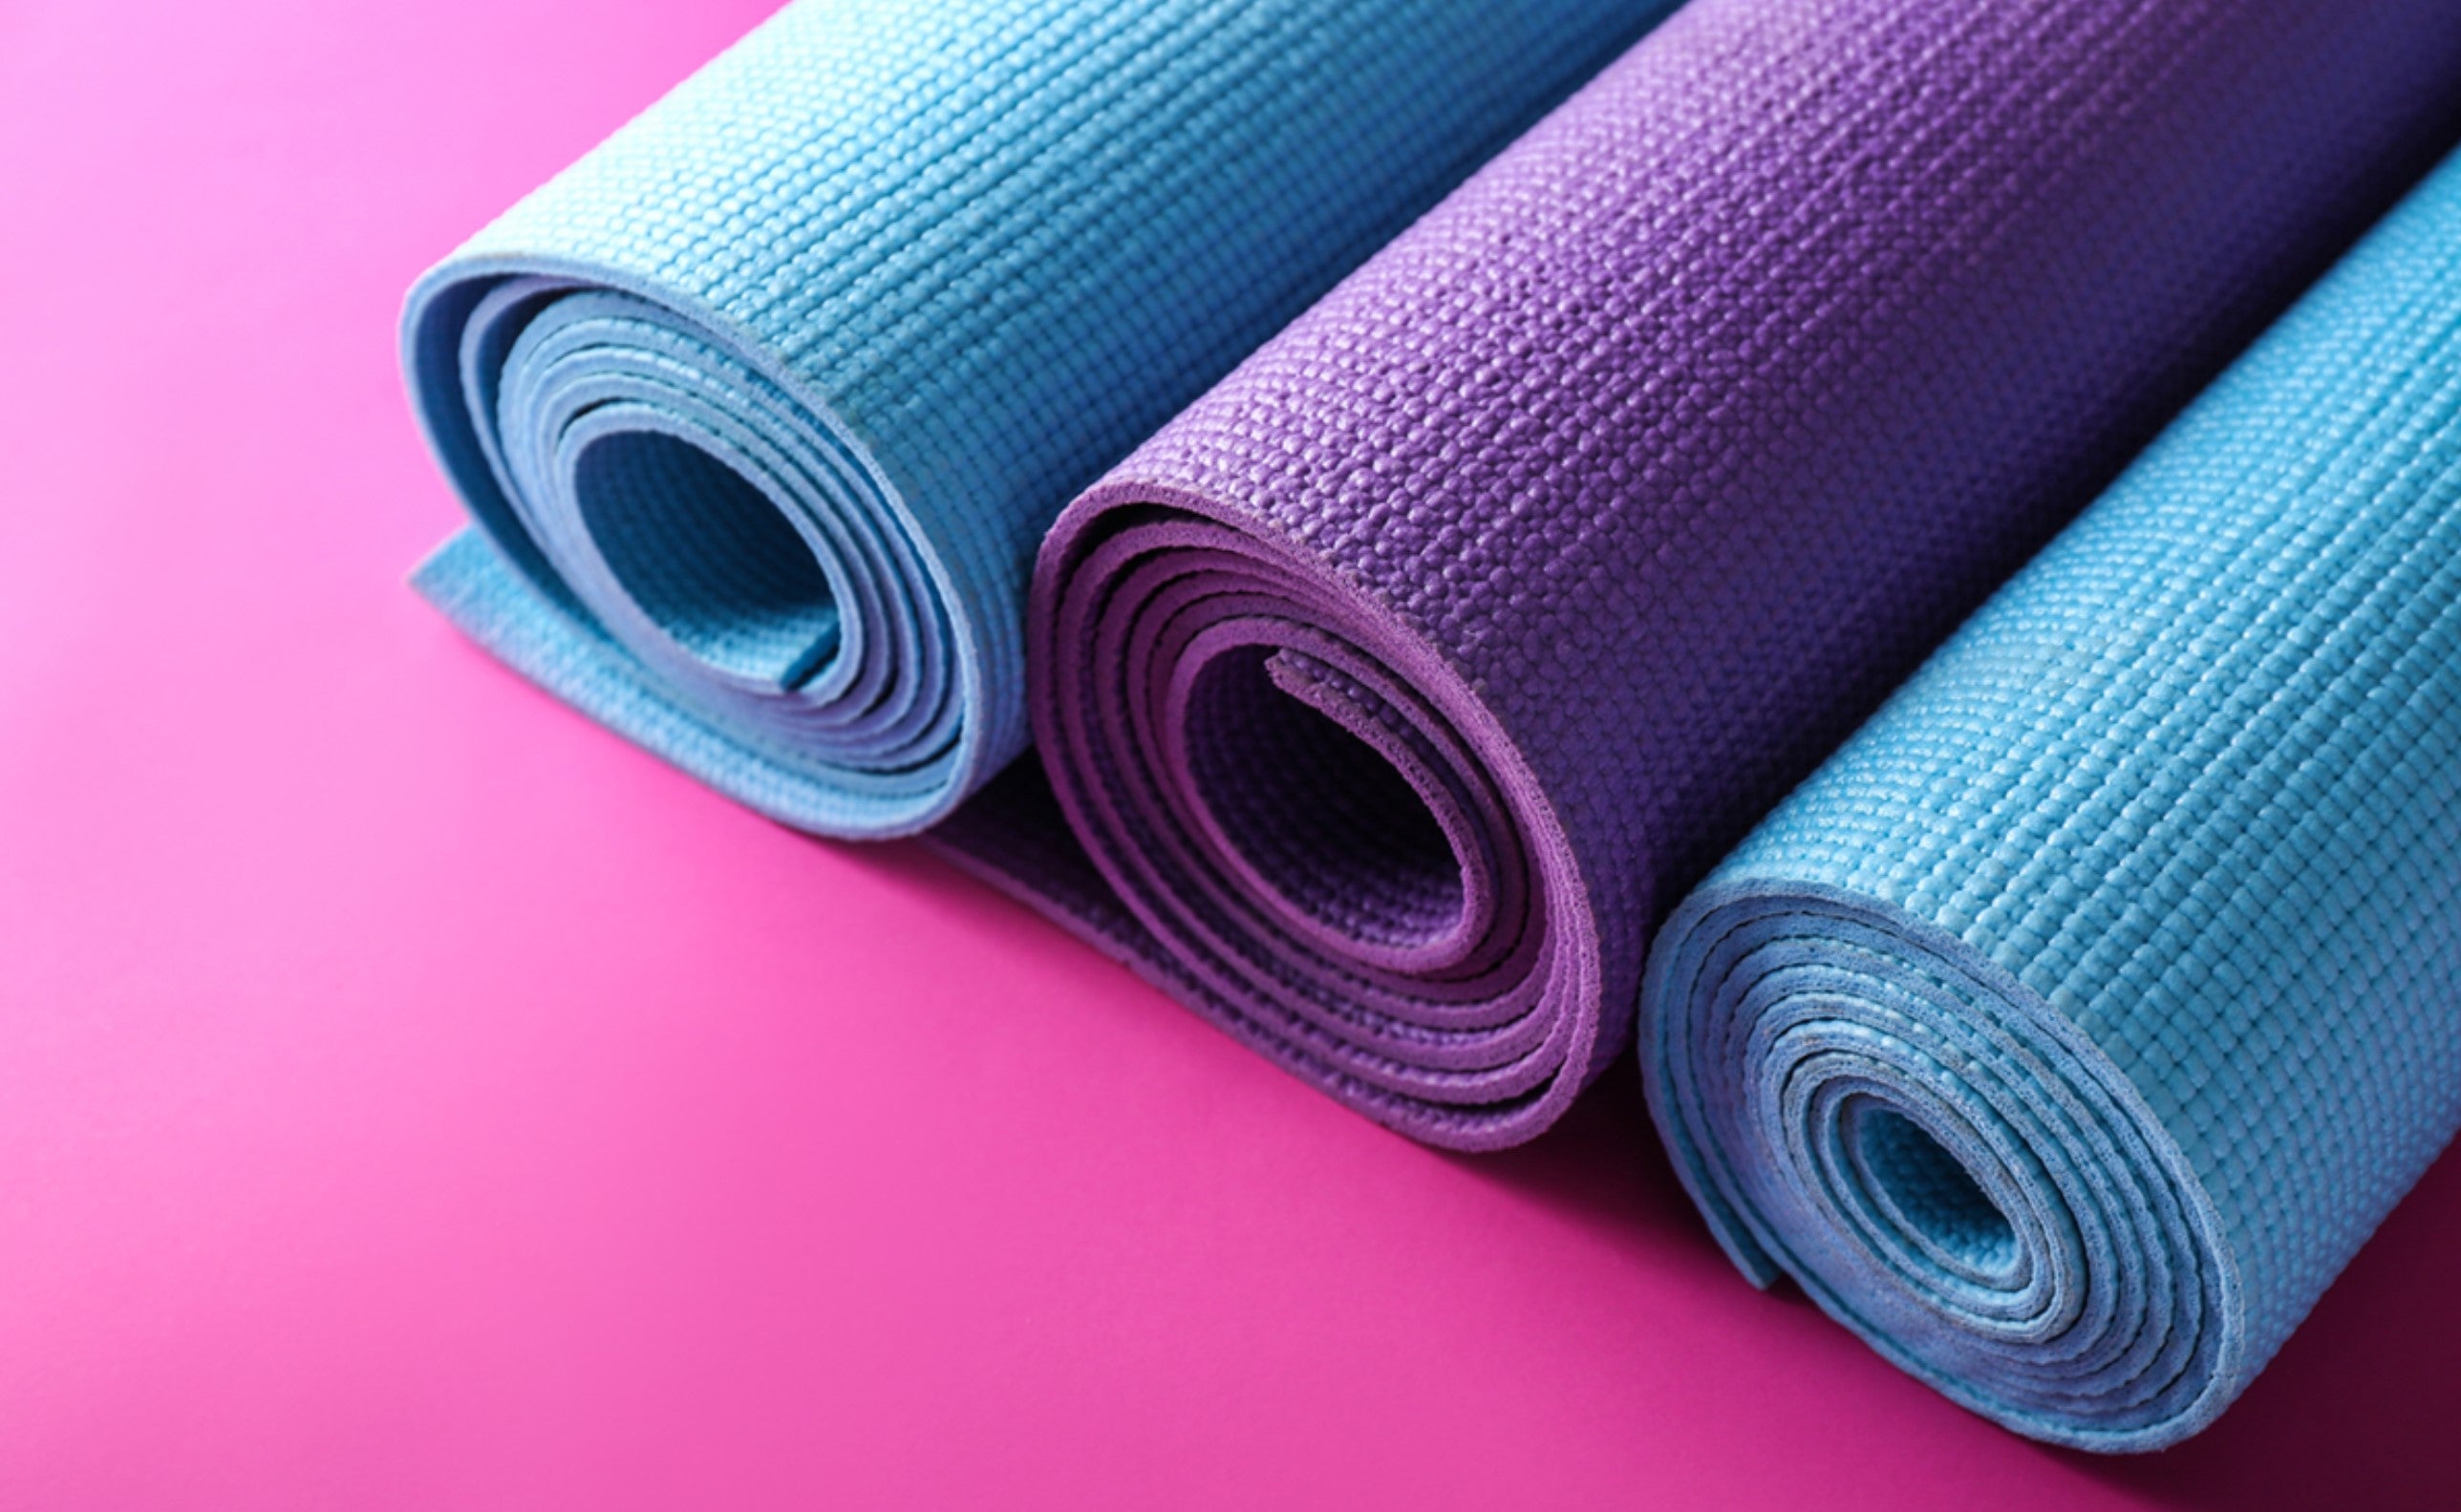 Sivan Health and Fitness NBR Yoga Mat